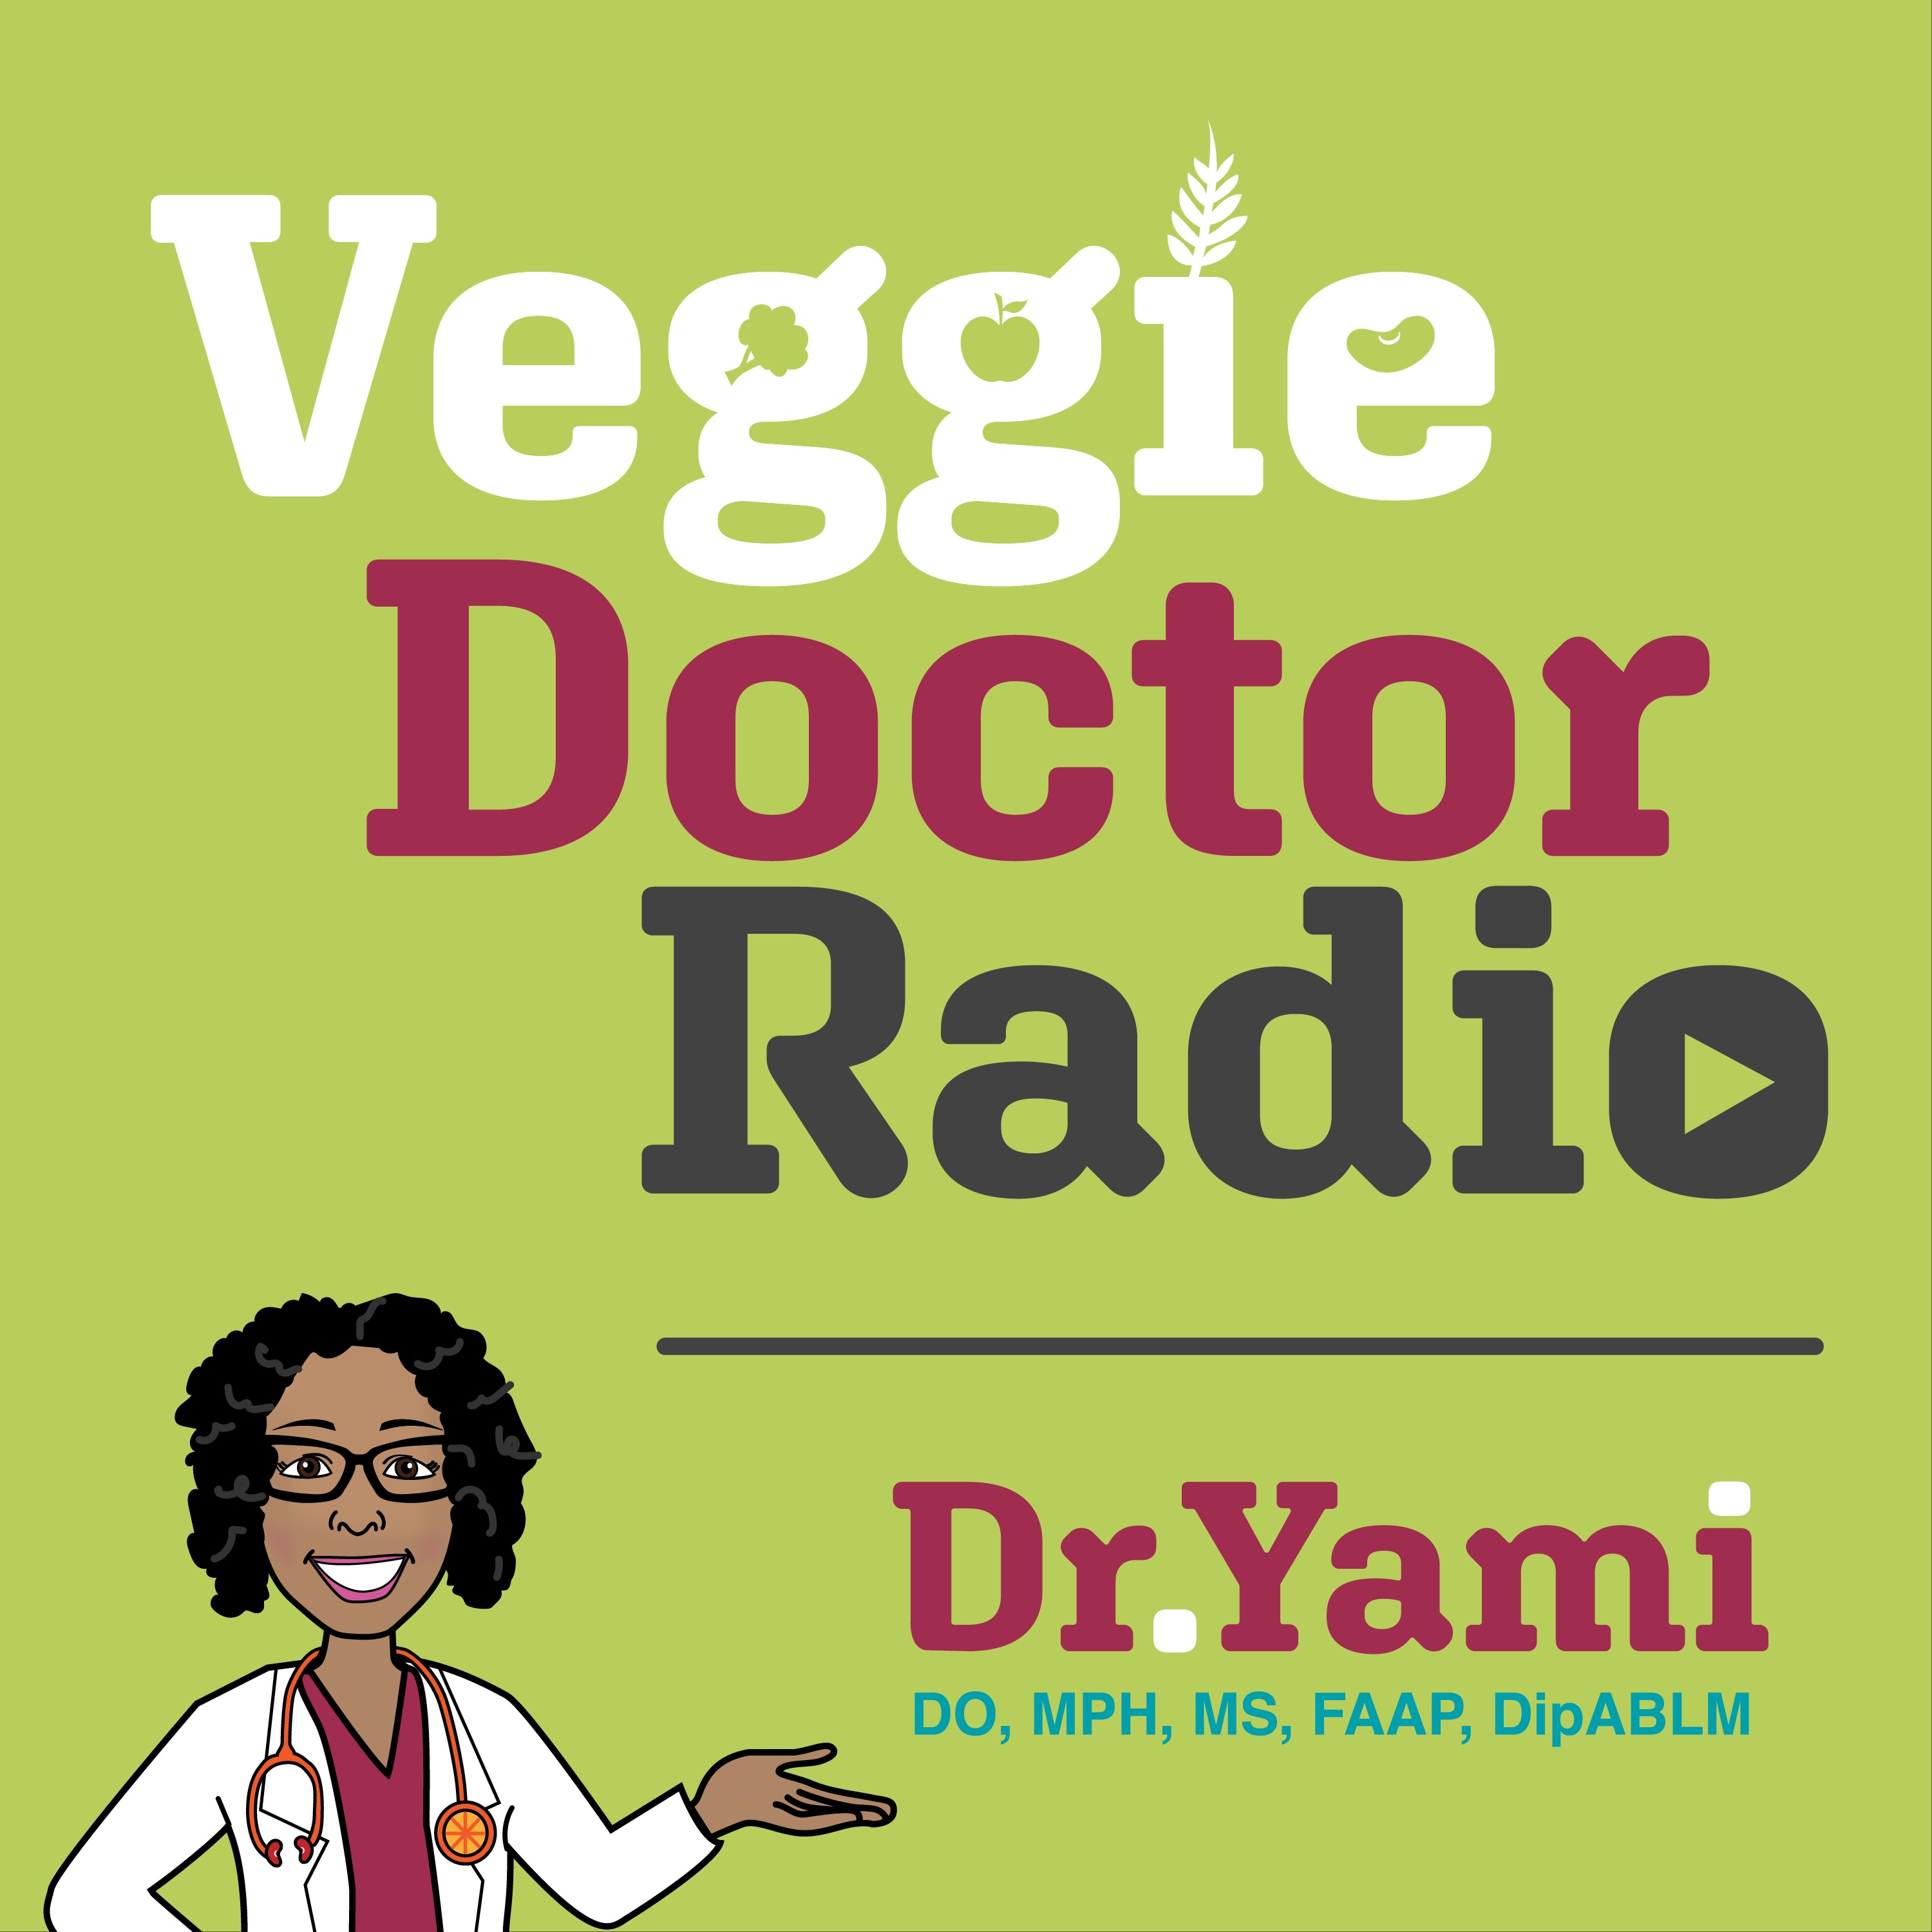 152: We Are Earth with Manju Kumar (Veggie Doctor Radio)